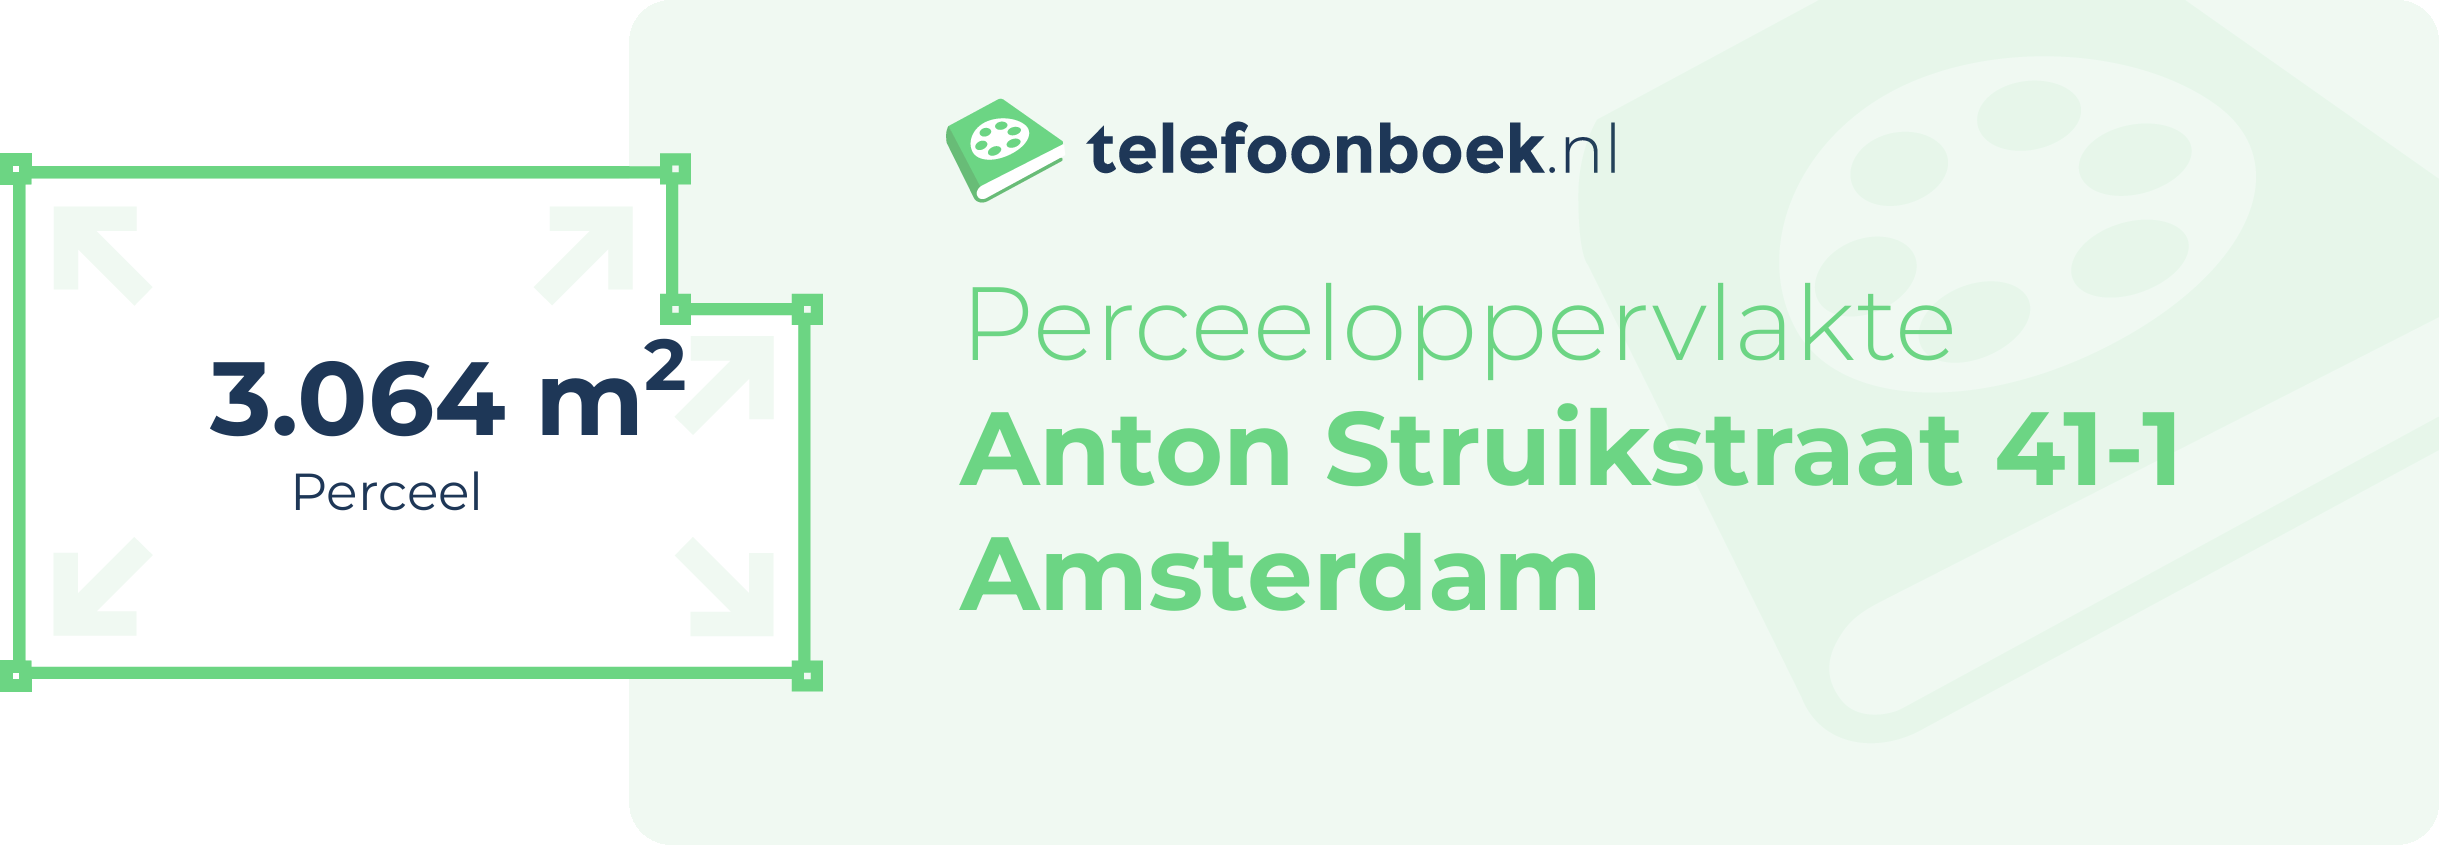 Perceeloppervlakte Anton Struikstraat 41-1 Amsterdam